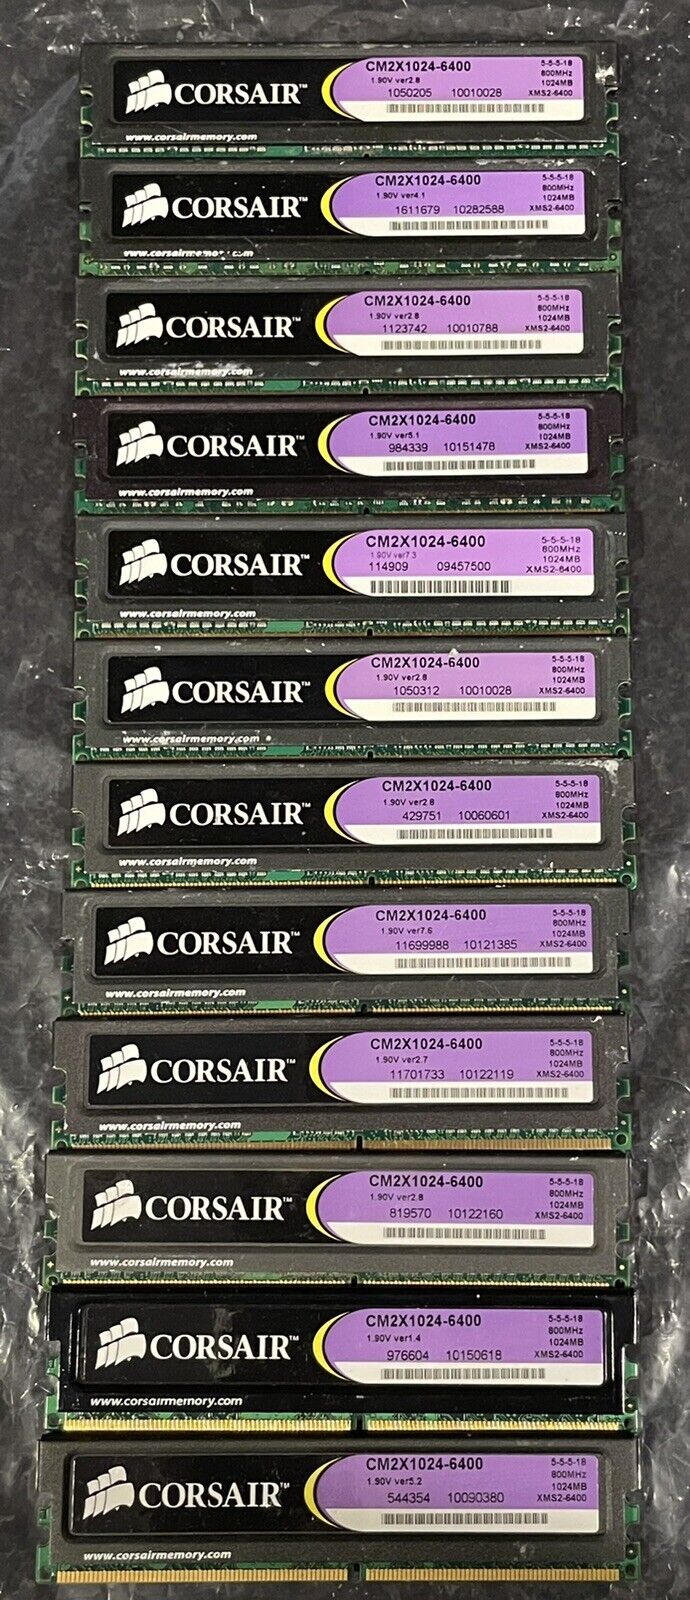 Corsair XMS2 4GB (4x1 GB) DDR2 800MHz CM2X1024-6400 Desktop Memory RAM